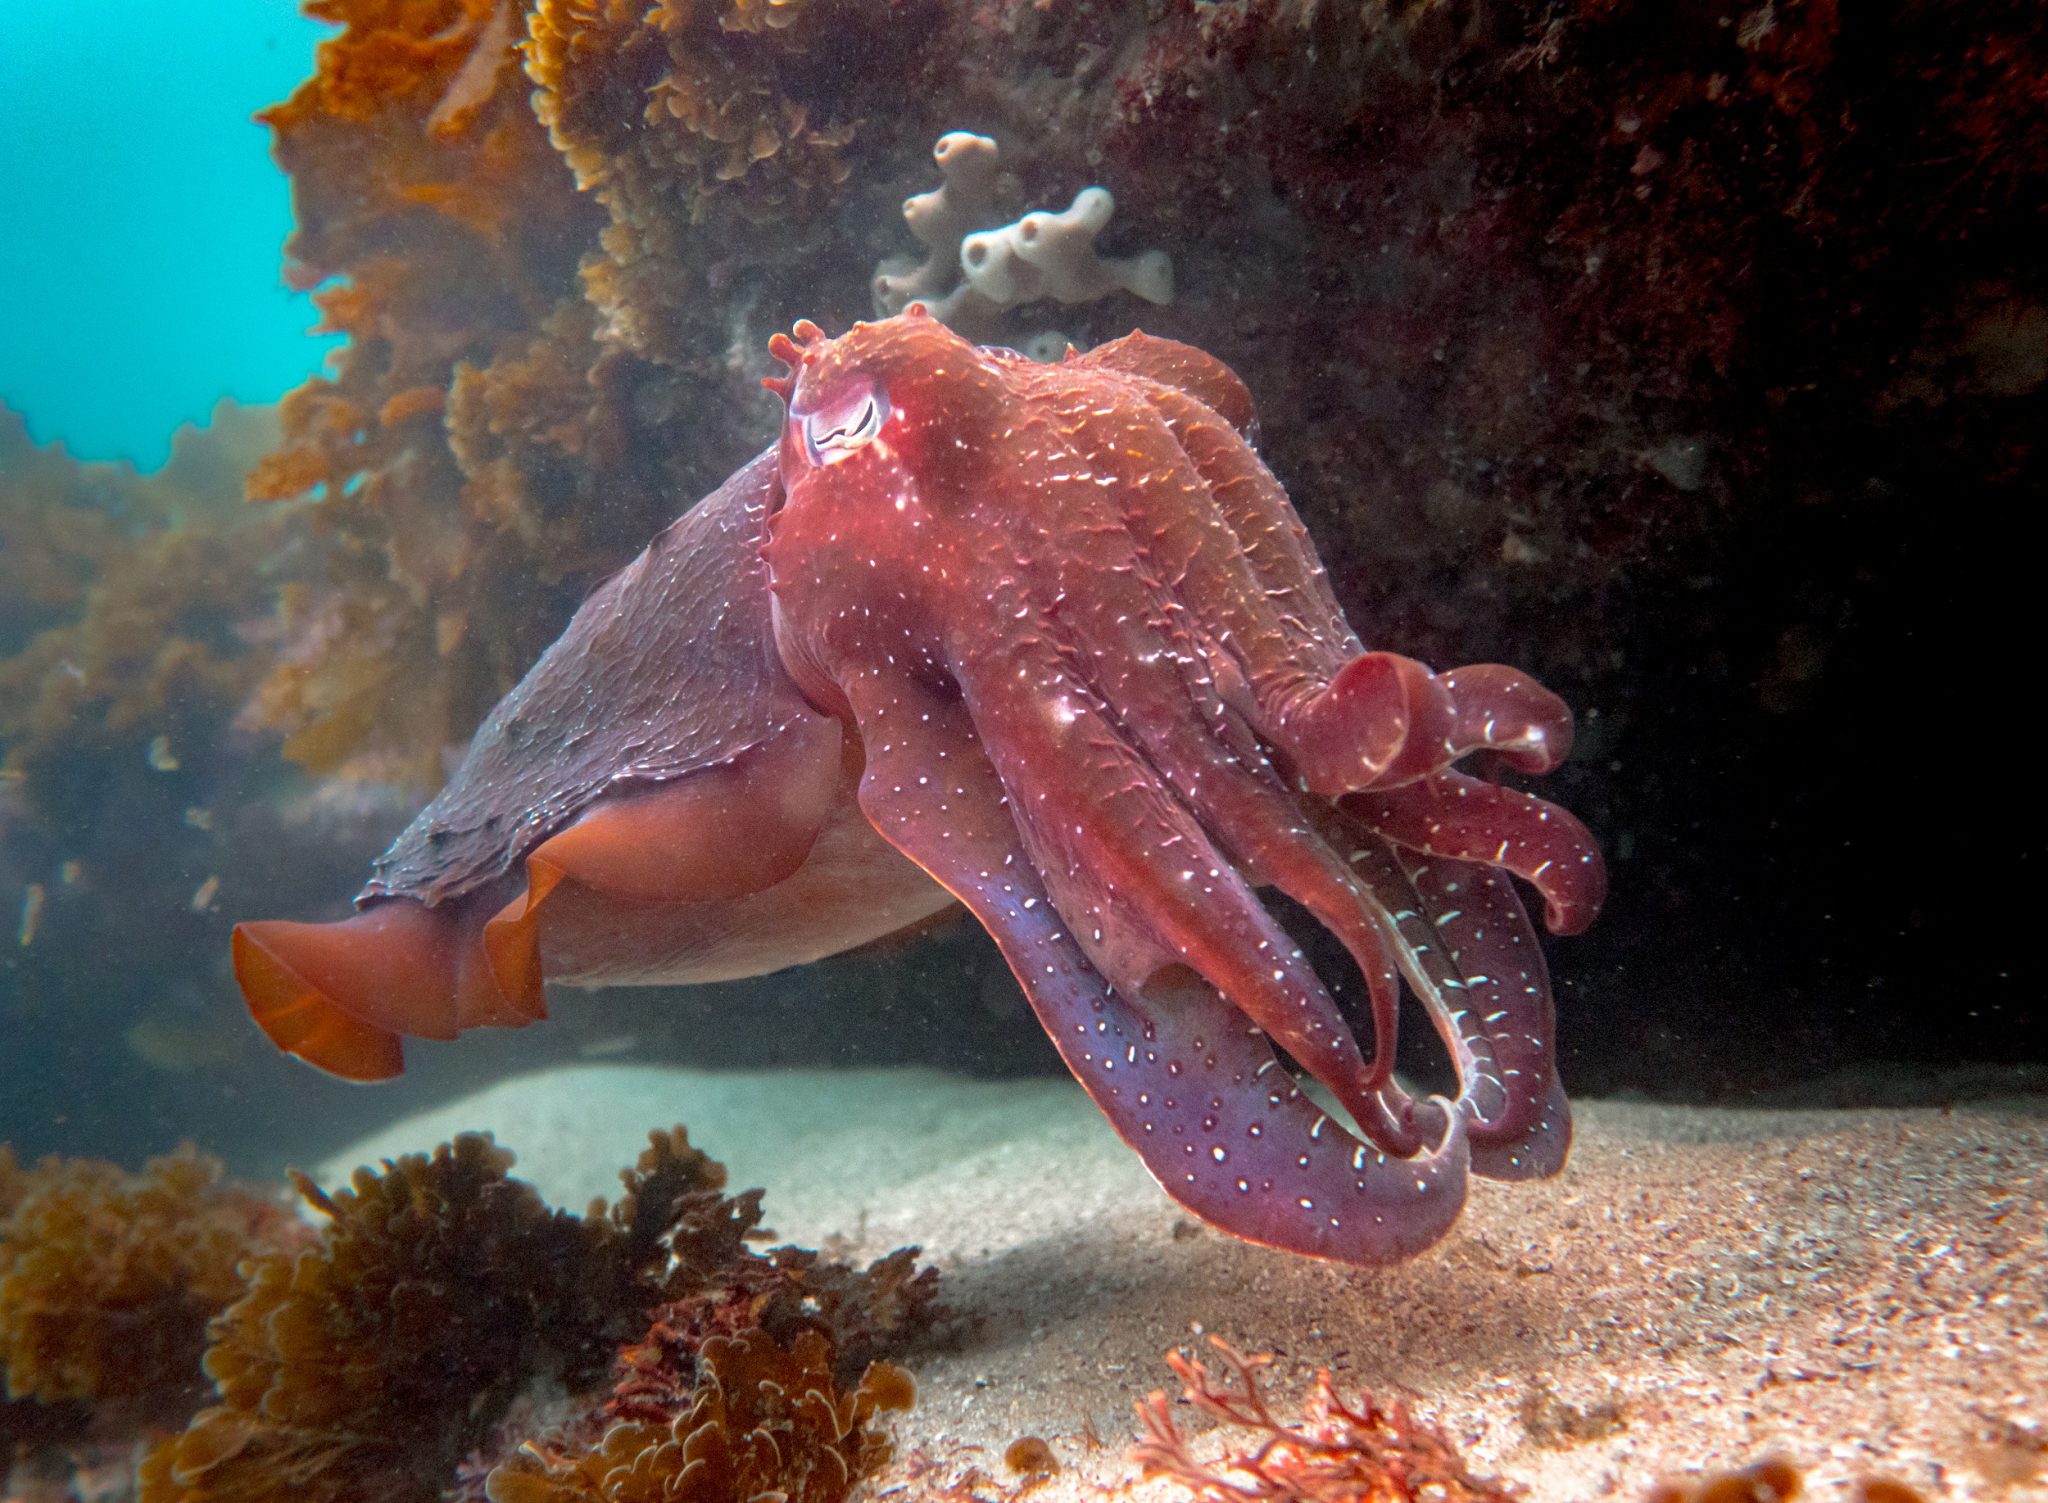 CuttlefishAustralia_Shutterstock